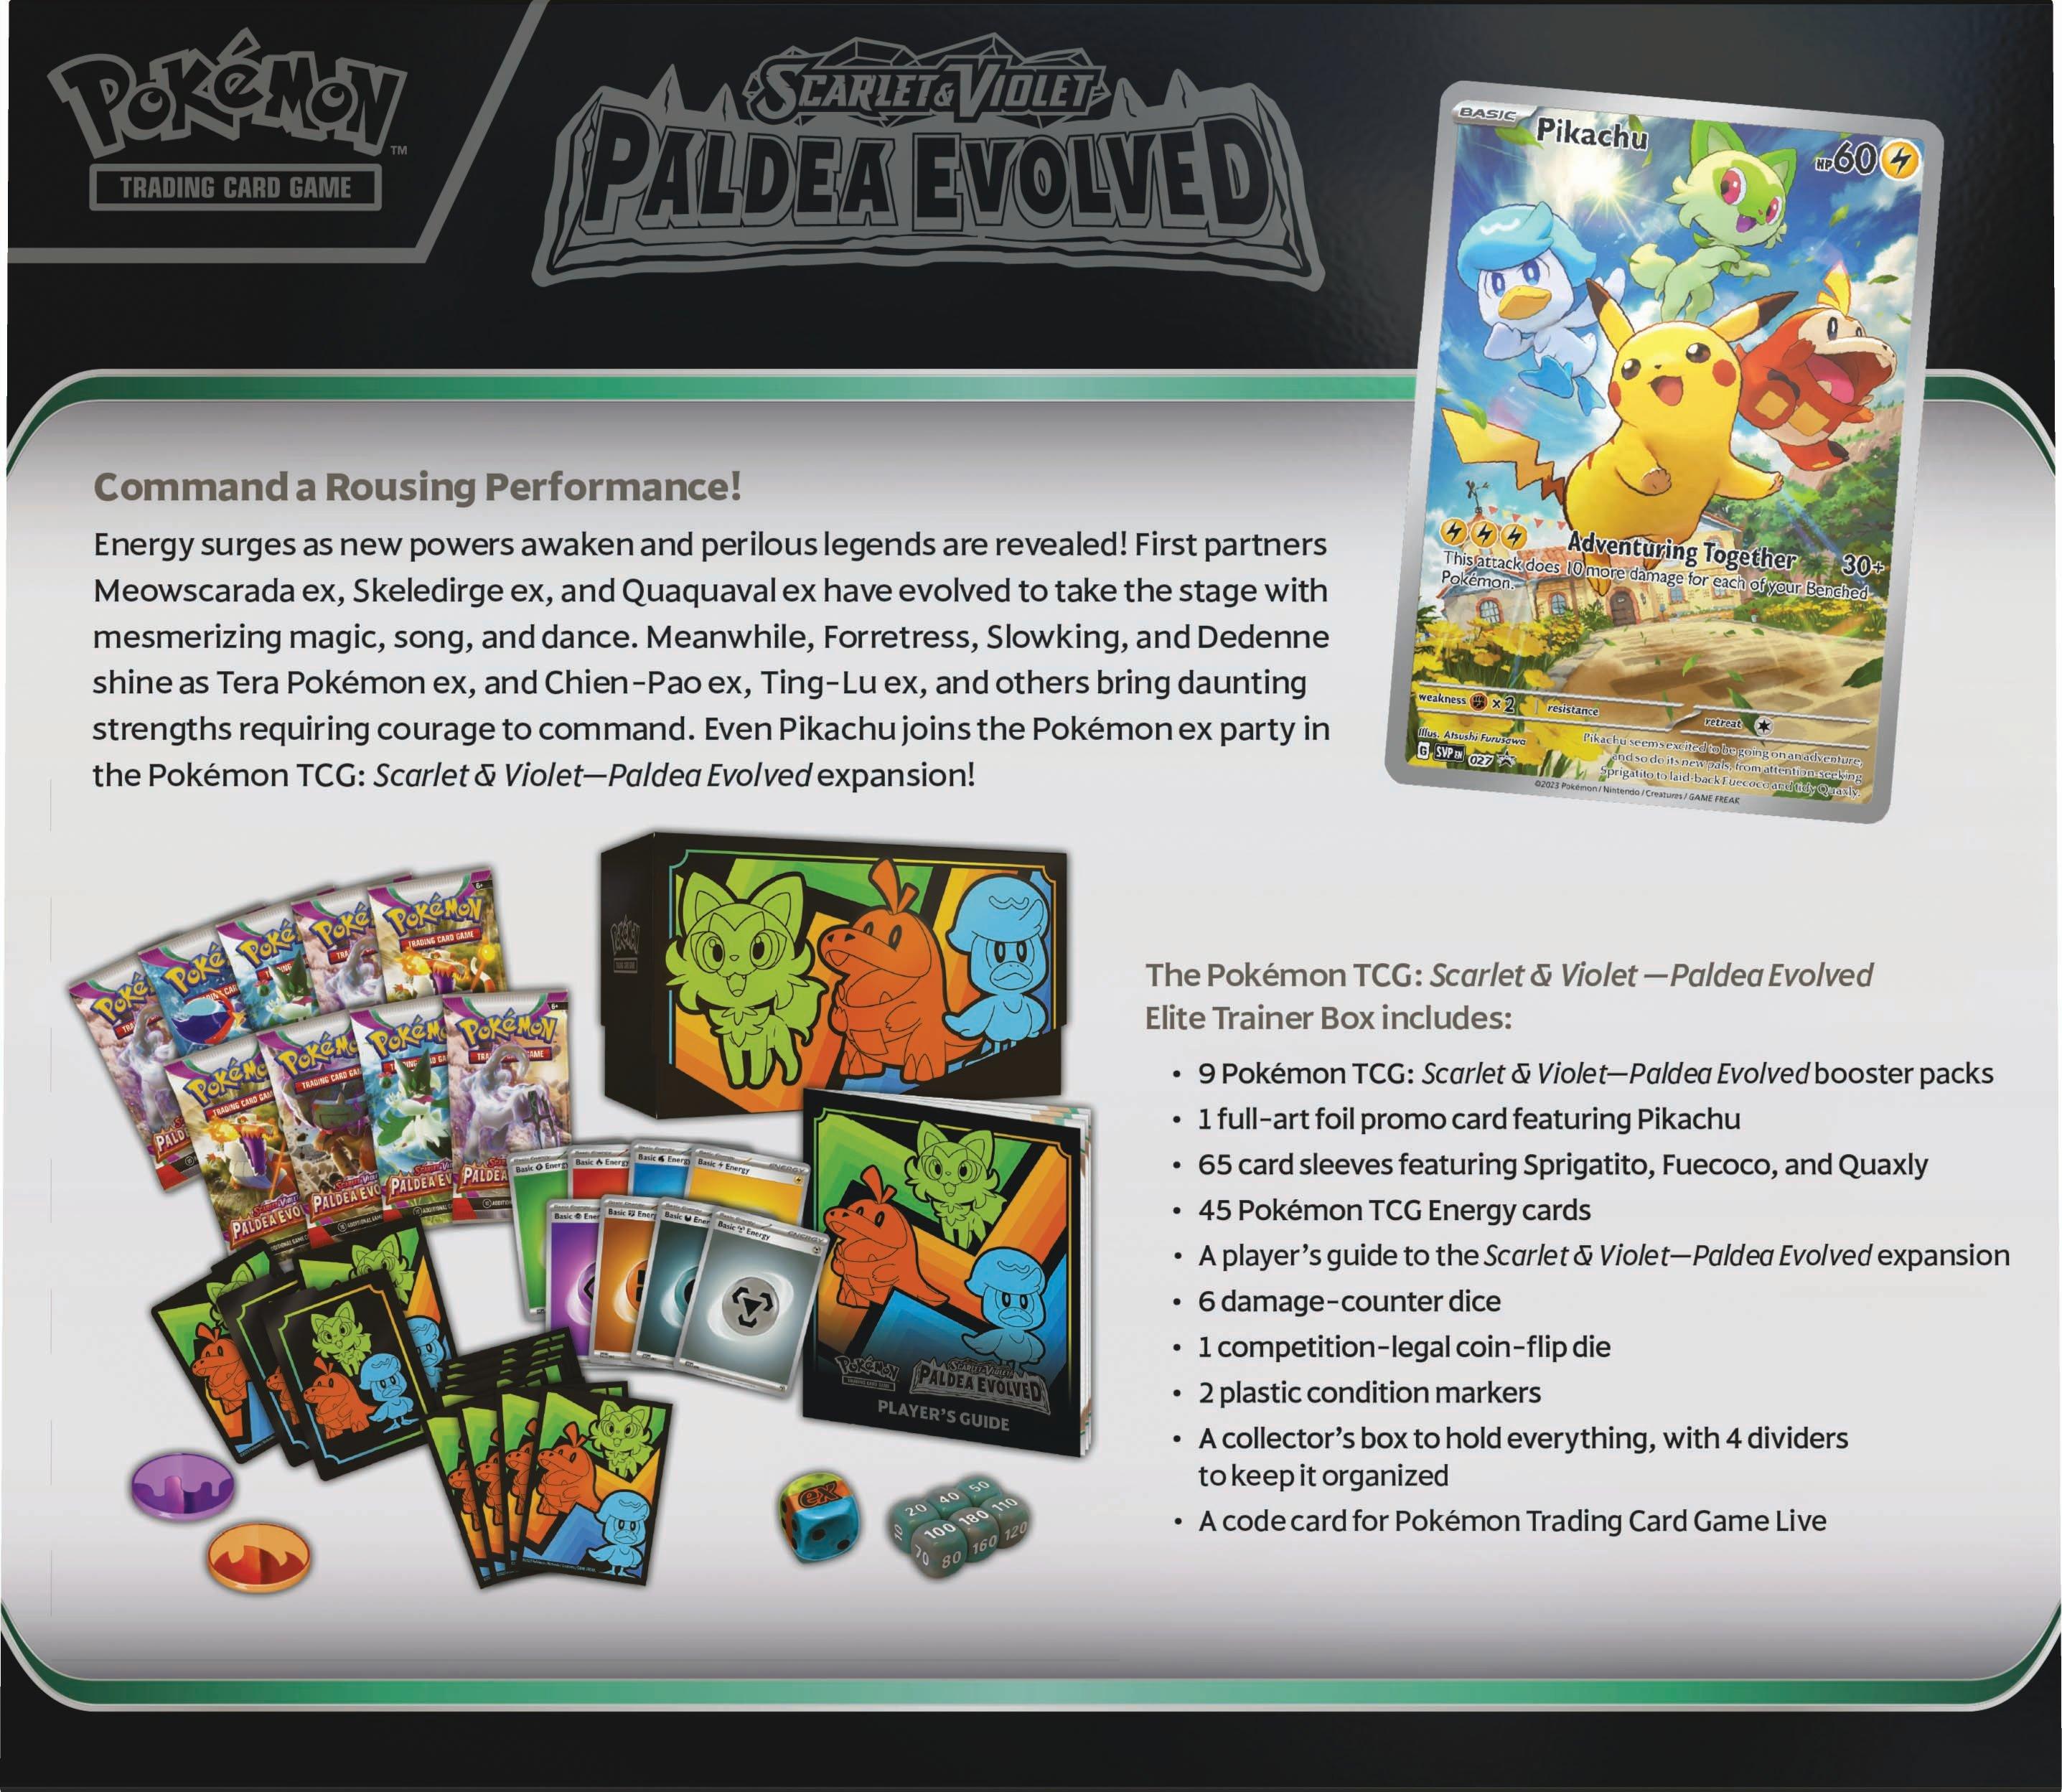 Pokémon - Display Evolution à Pladea EV02 - FR, TYCA'P